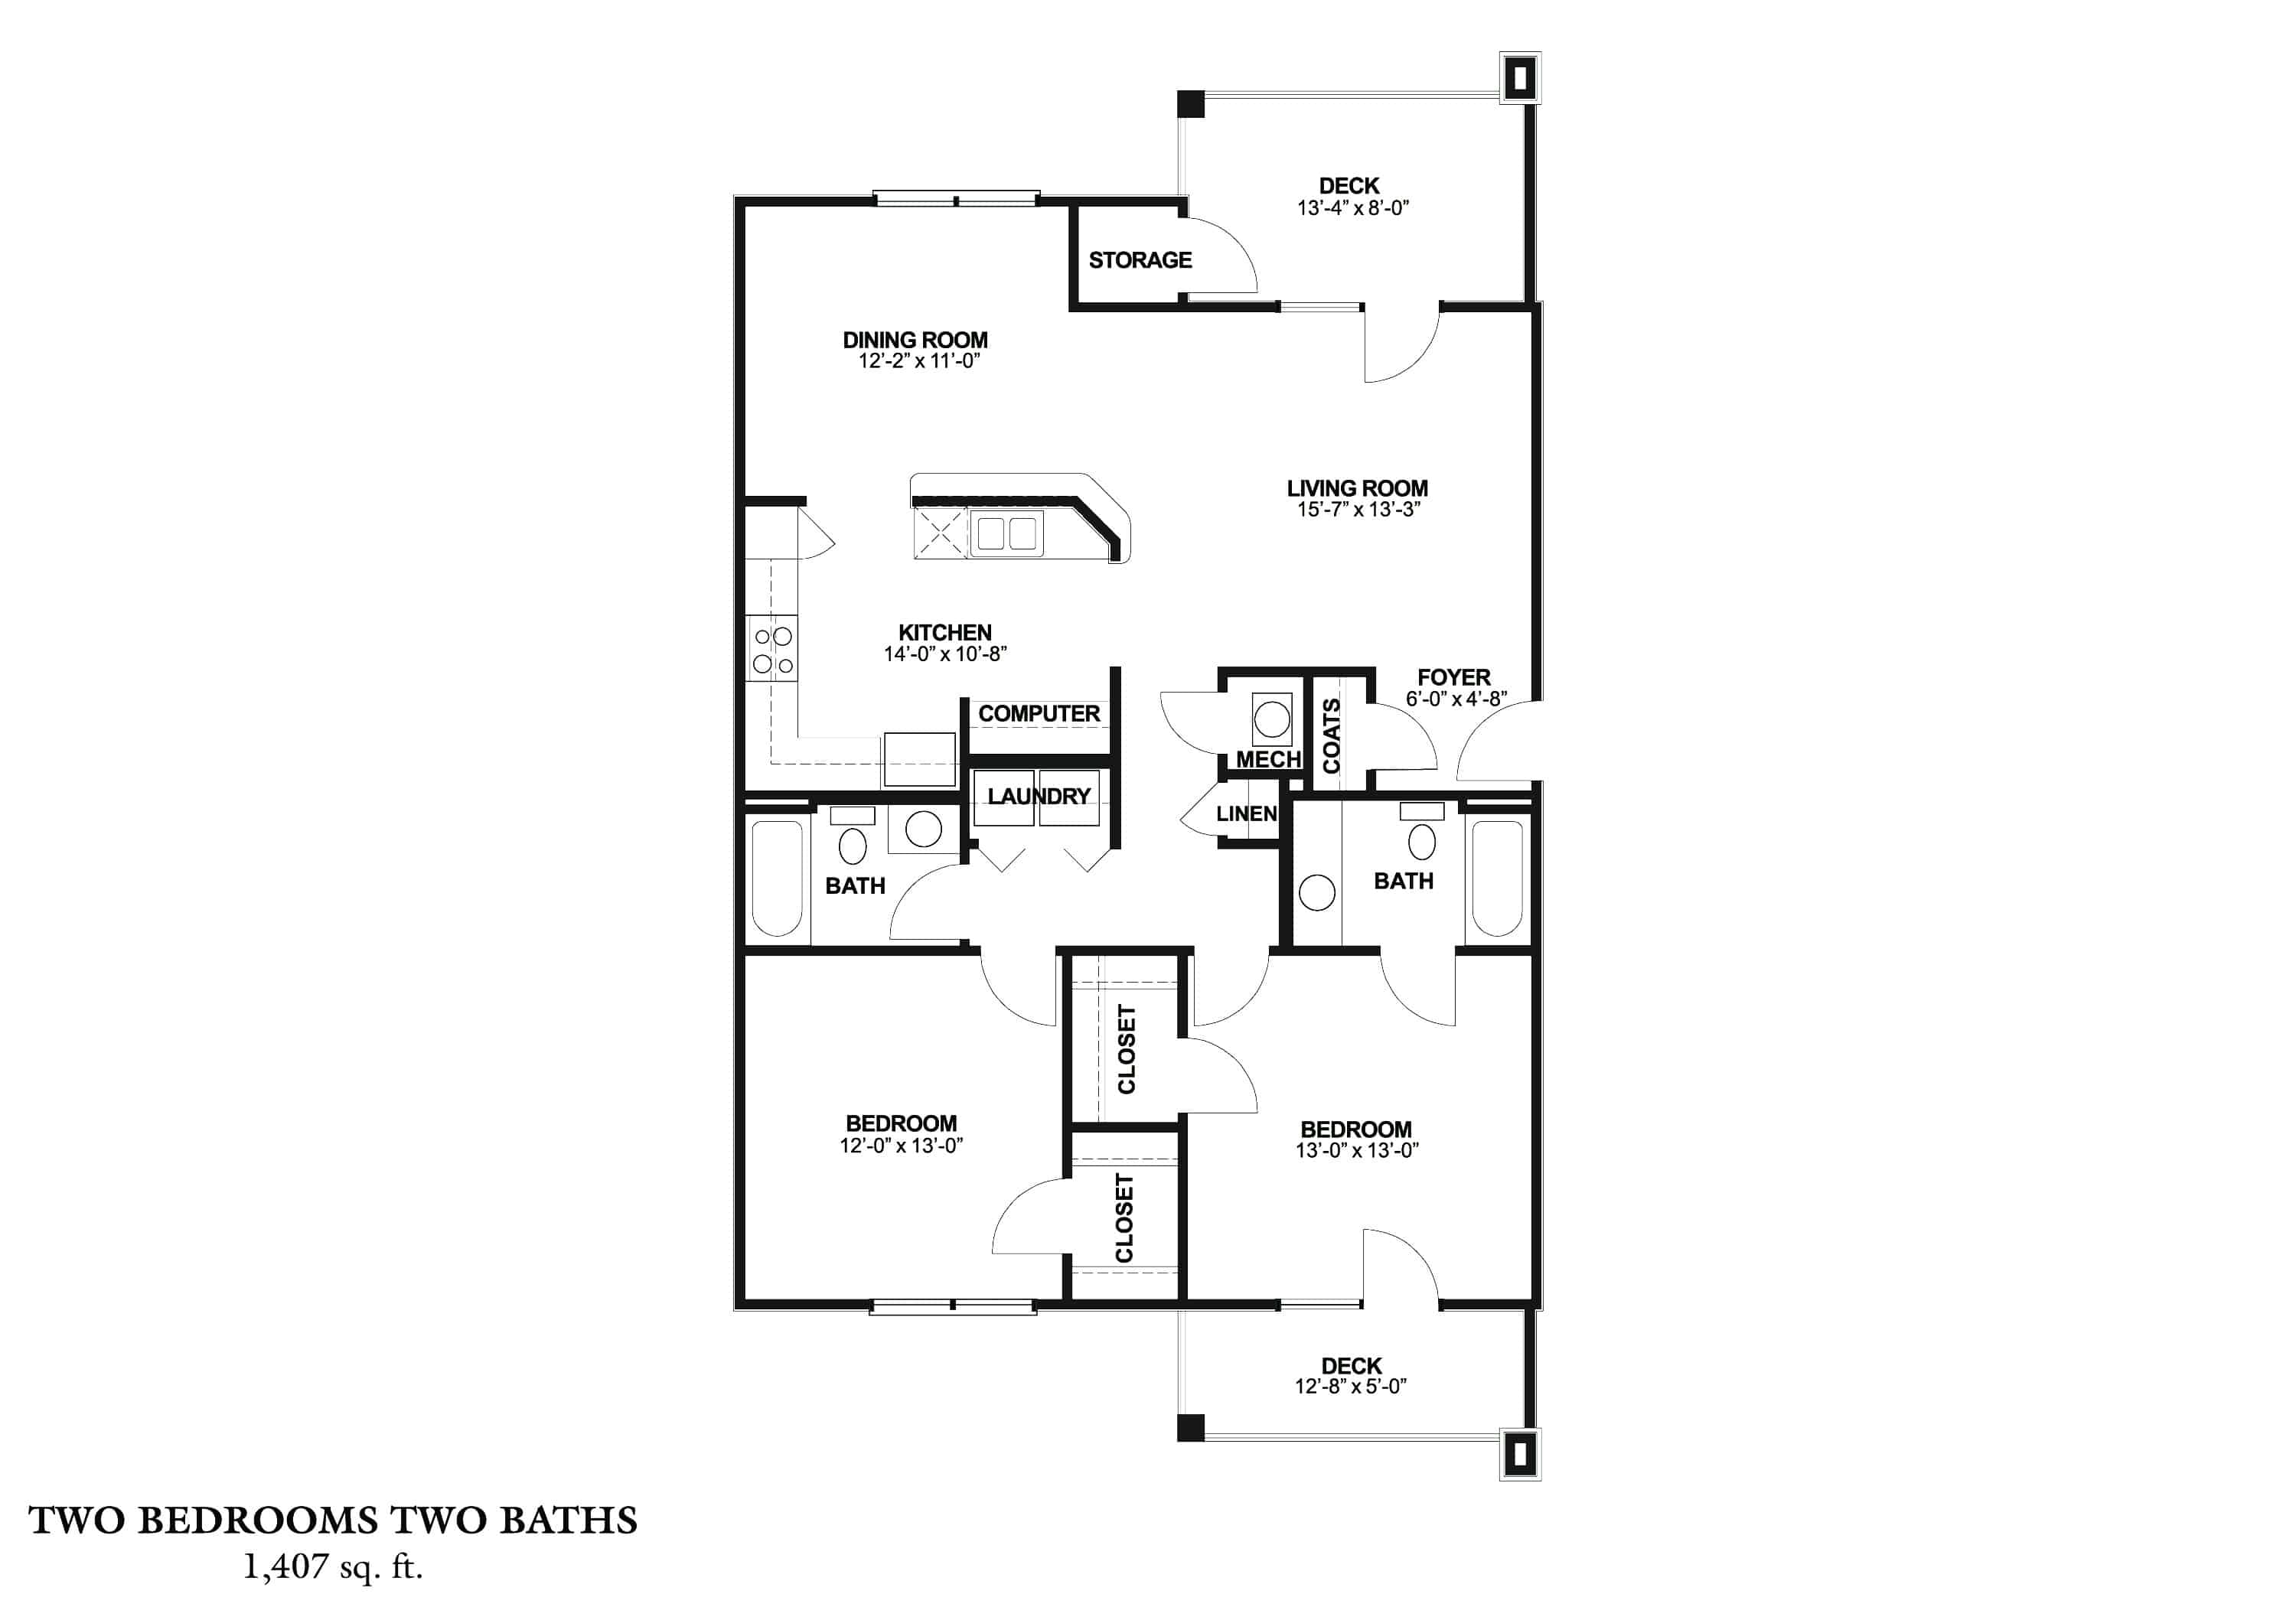 Greystone Properties Corporate Stay Two bedroom with deck floor plan.